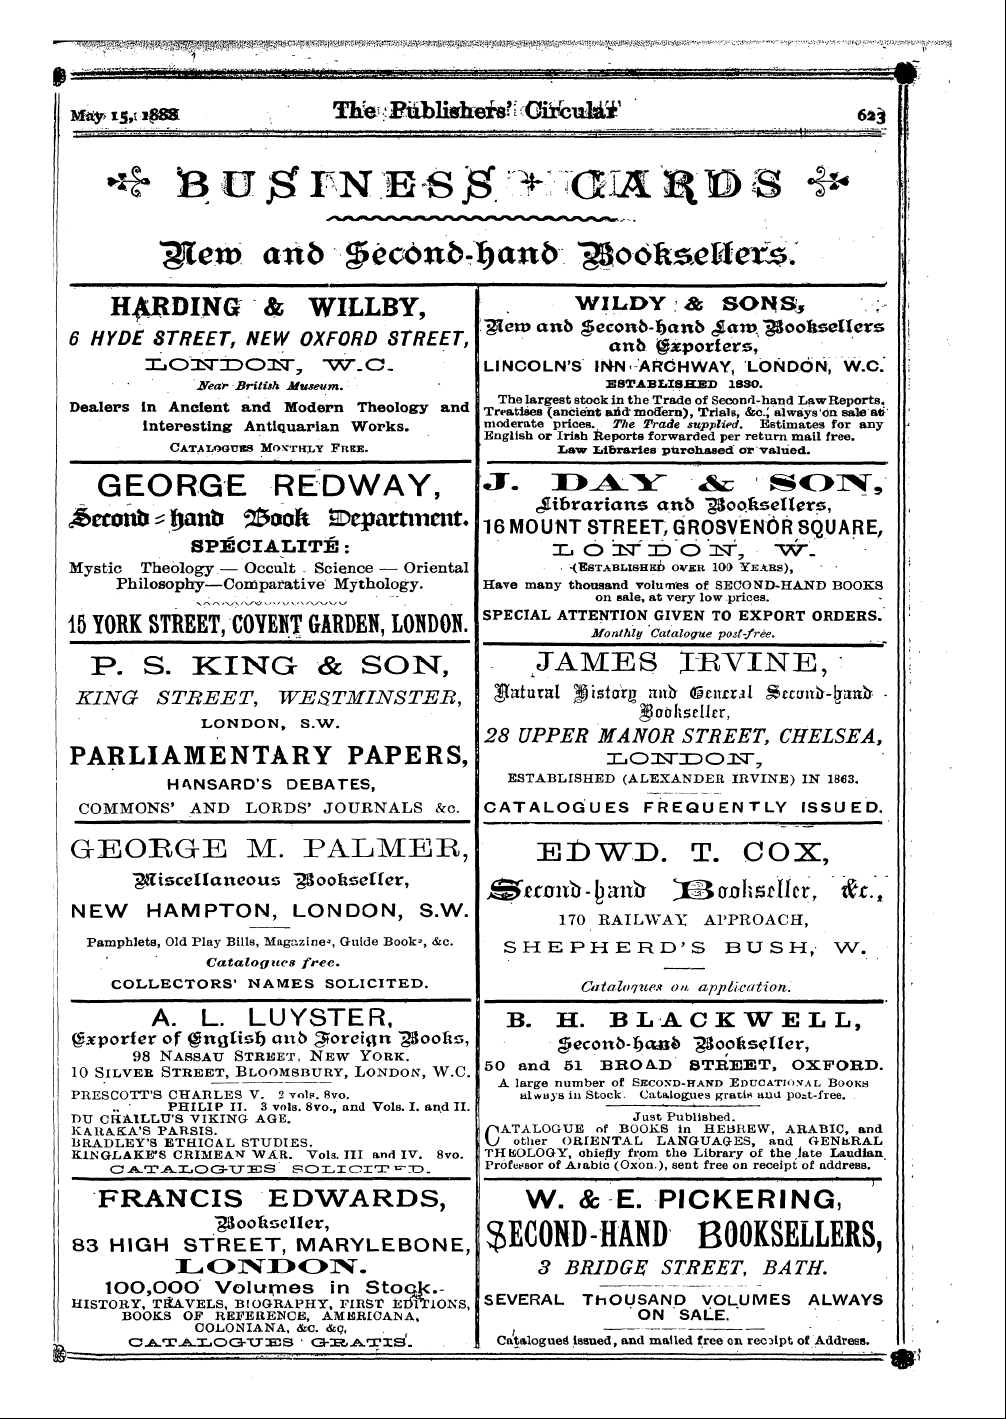 Publishers’ Circular (1880-1890): jS F Y, 1st edition - Ad12512